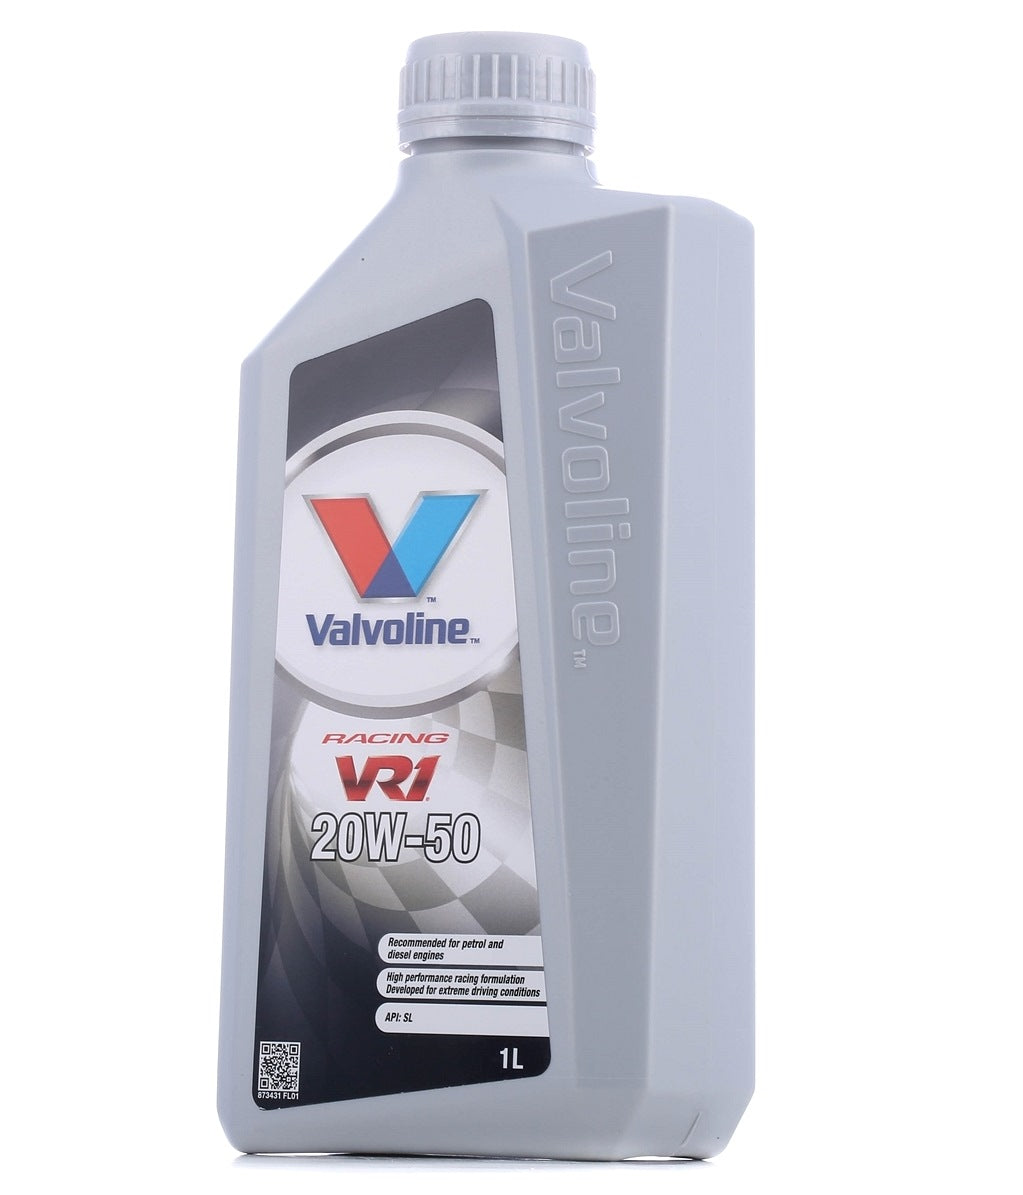 VALVOLINE VR1 RACING 20W50 - cartone 12 litri